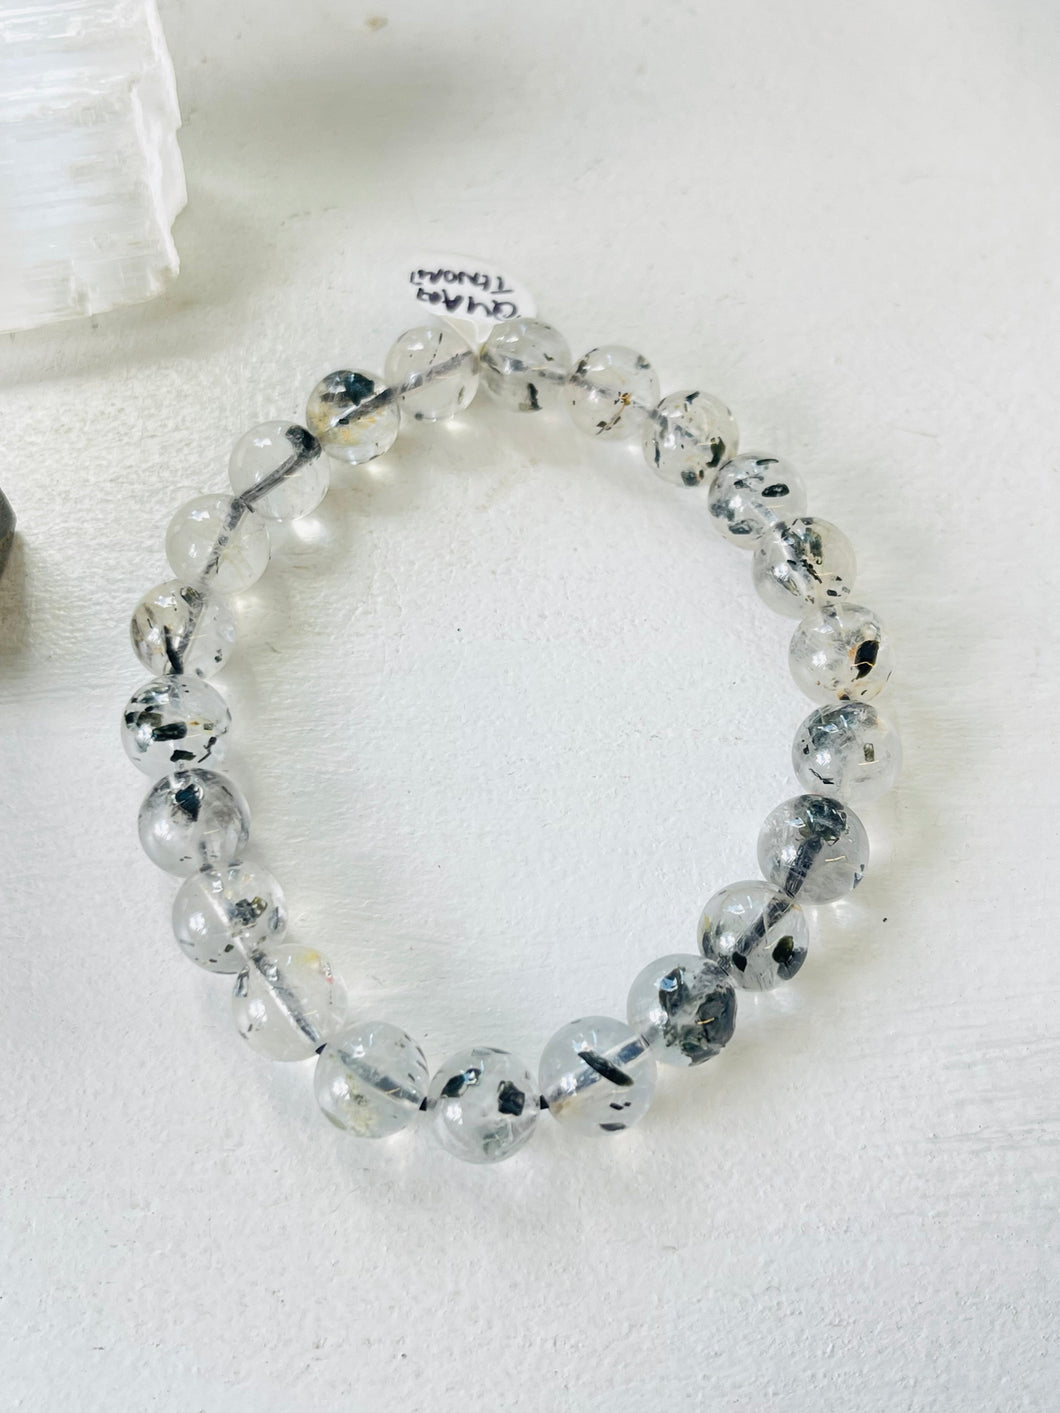 Bracelet with quartz